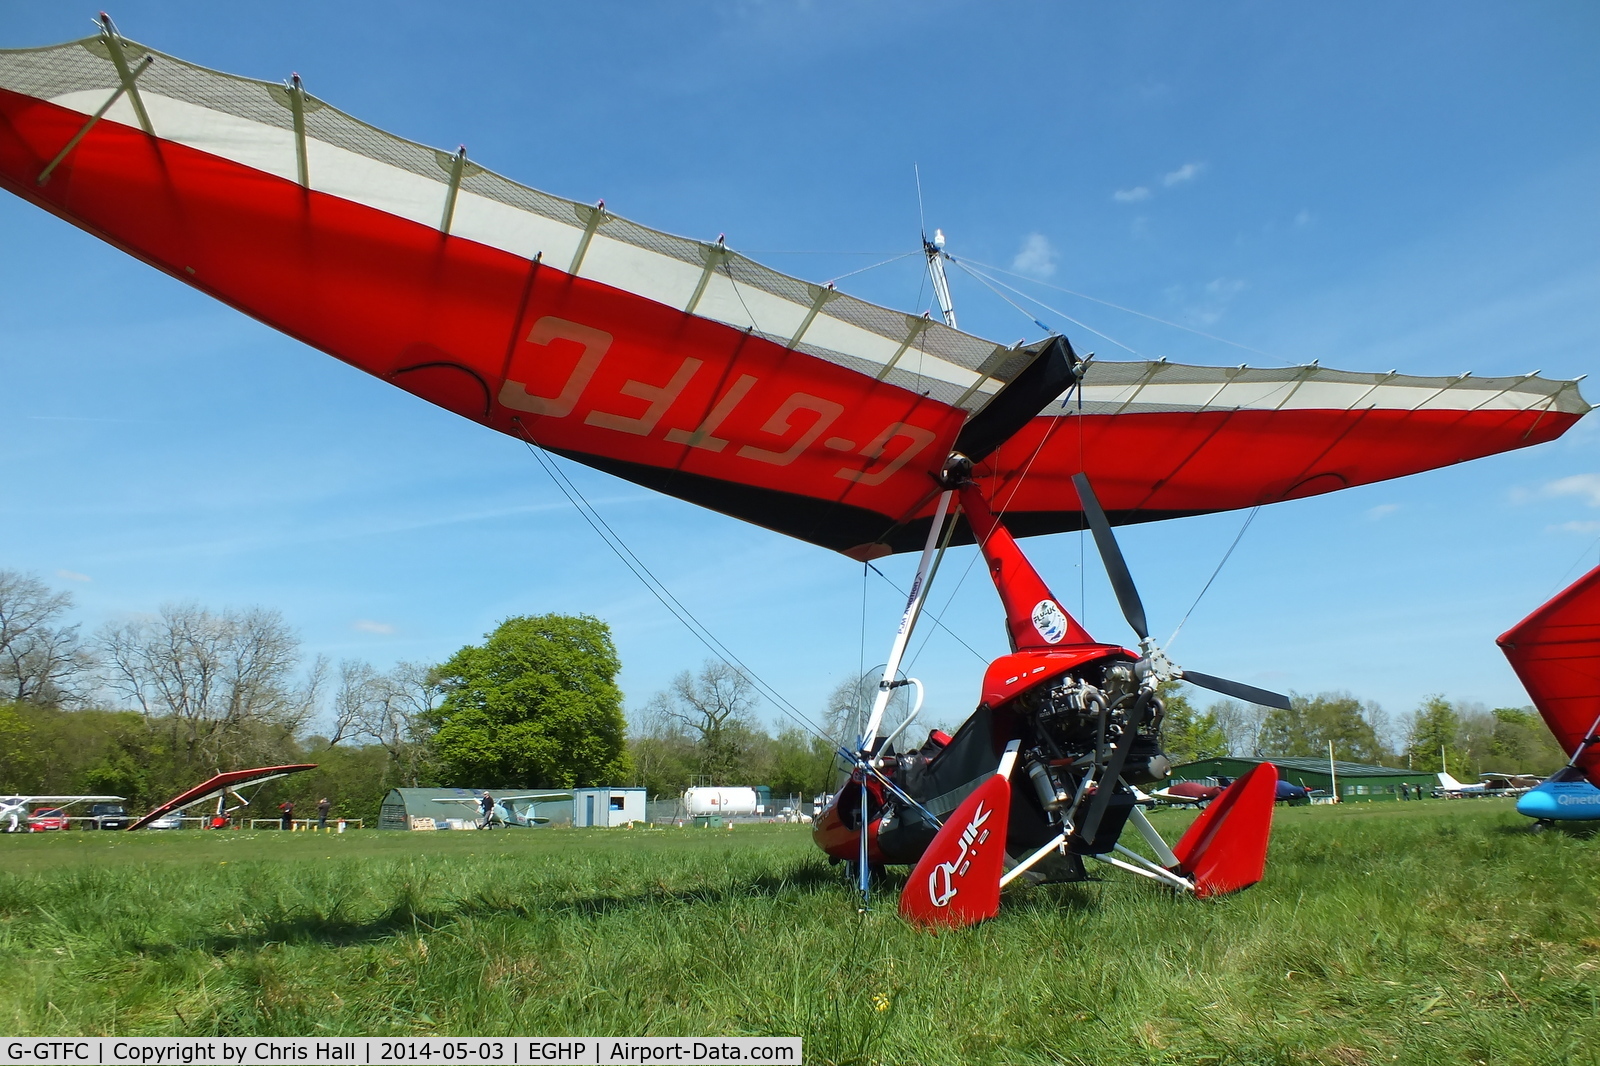 G-GTFC, 2006 P&M Aviation Pegasus Quik C/N 8184, at the 2014 Microlight Trade Fair, Popham